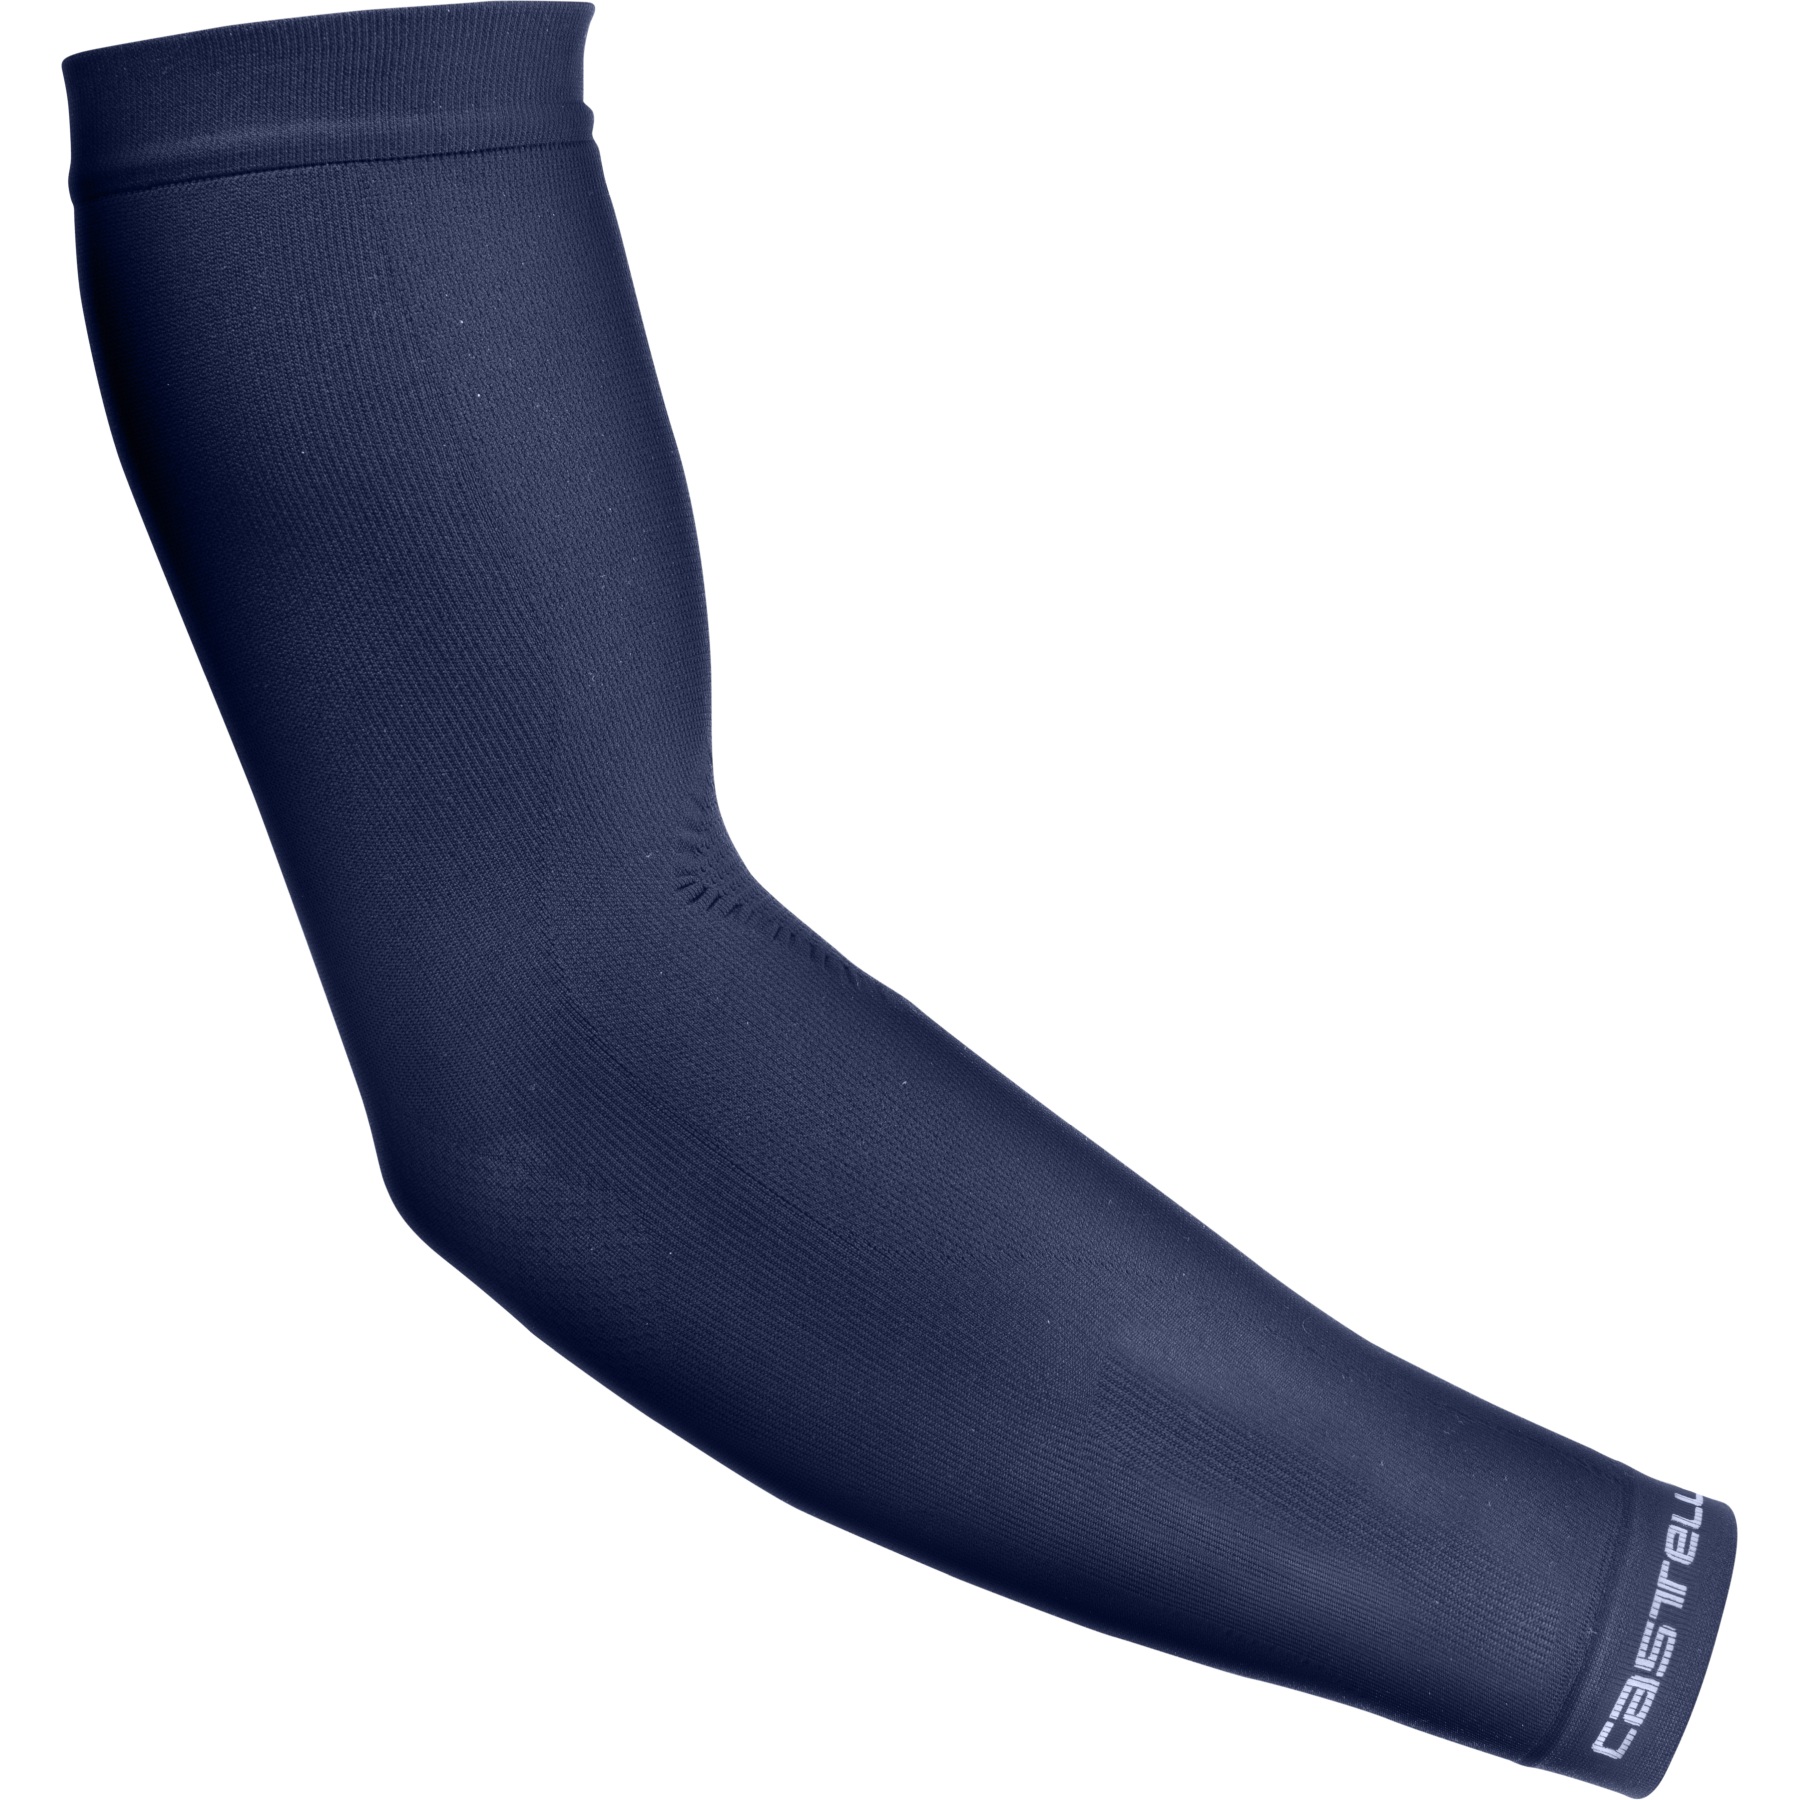 Productfoto van Castelli Pro Seamless 2 Arm Warmer - belgian blue 424